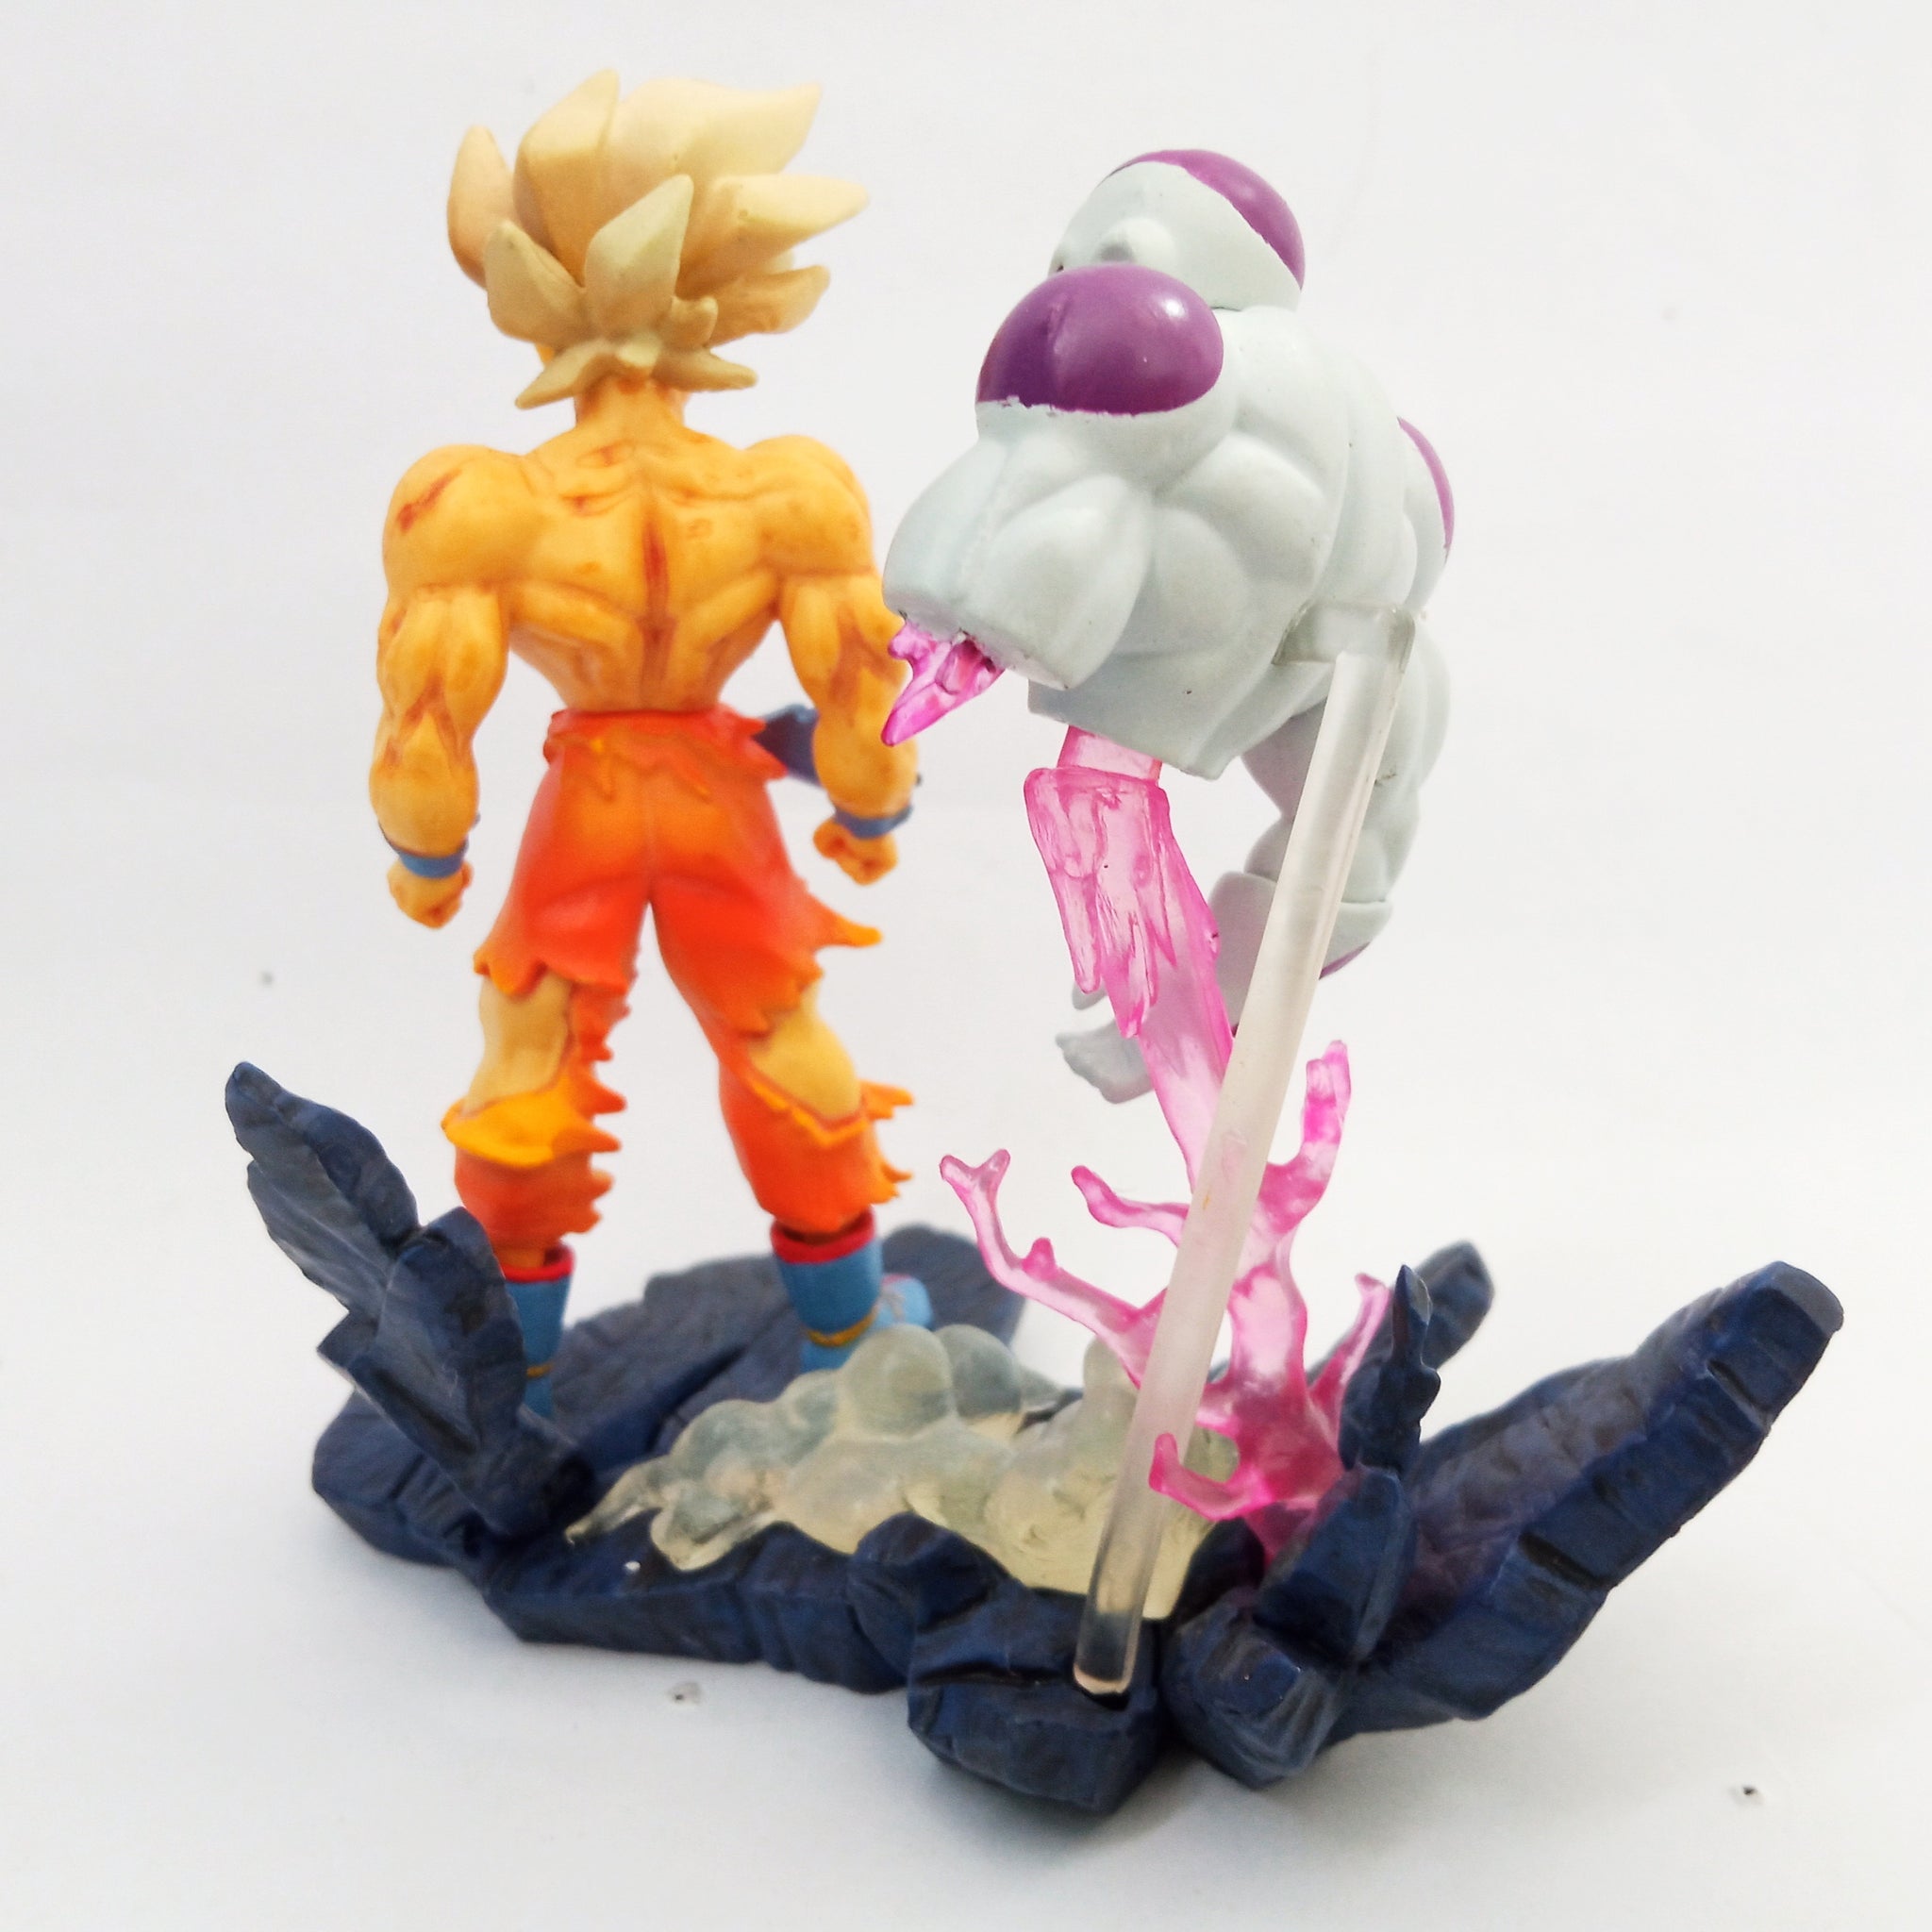 Figurines duo Son Goku & Freezer (Final Form) - Dragon Ball Super